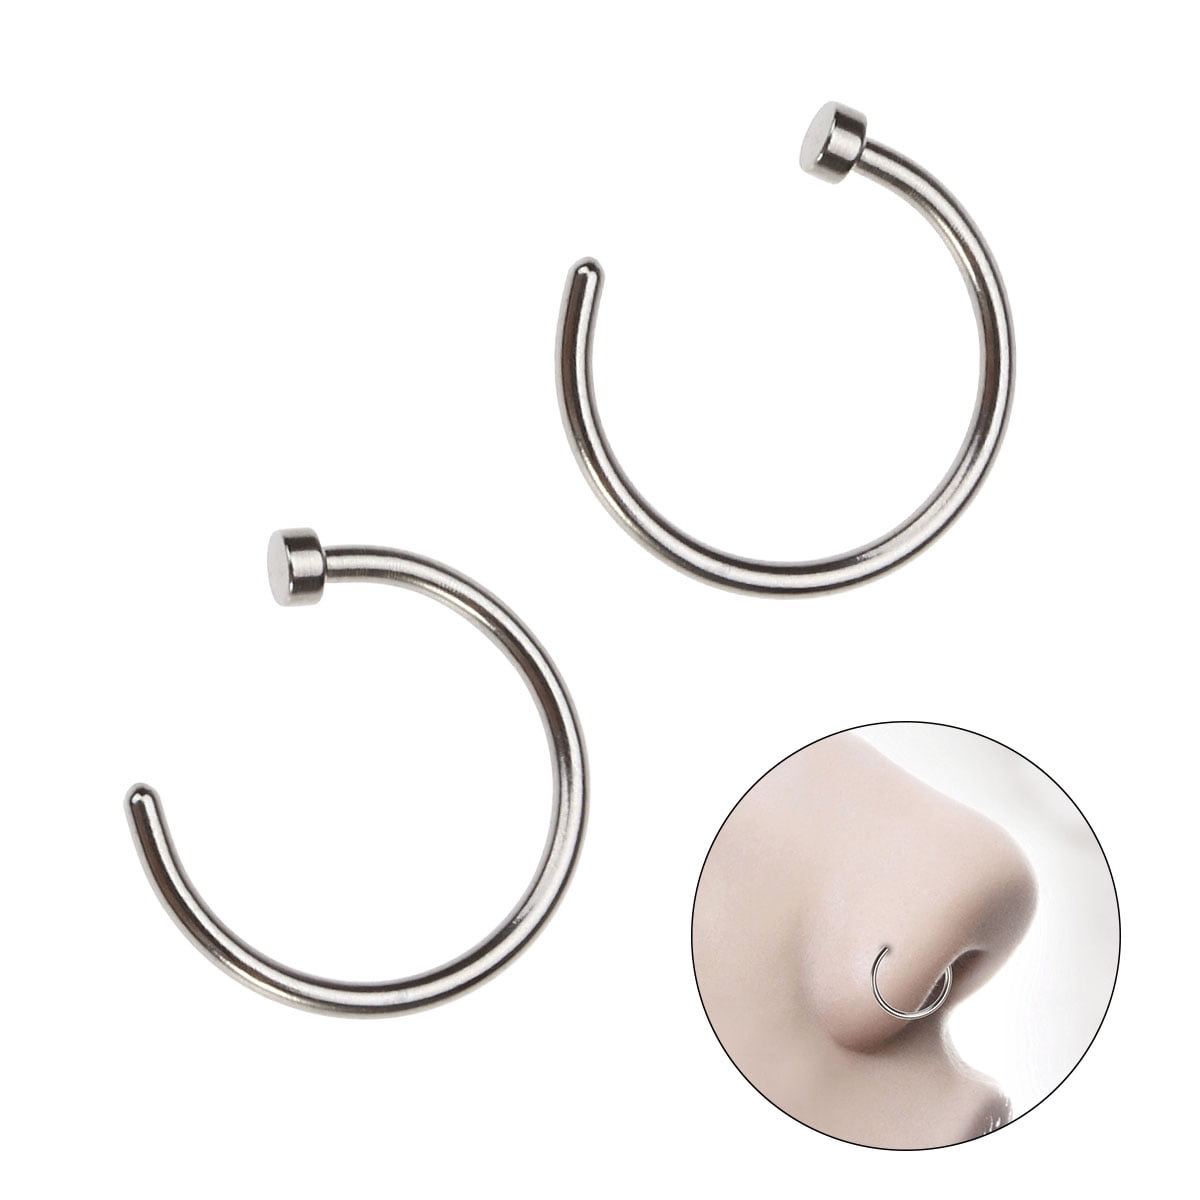 Ruifan Stainless Steel Body Jewelry Piercing Earrings Nose Hoop Ring Unisex 22 Gauge 6mm 8mm 10mm